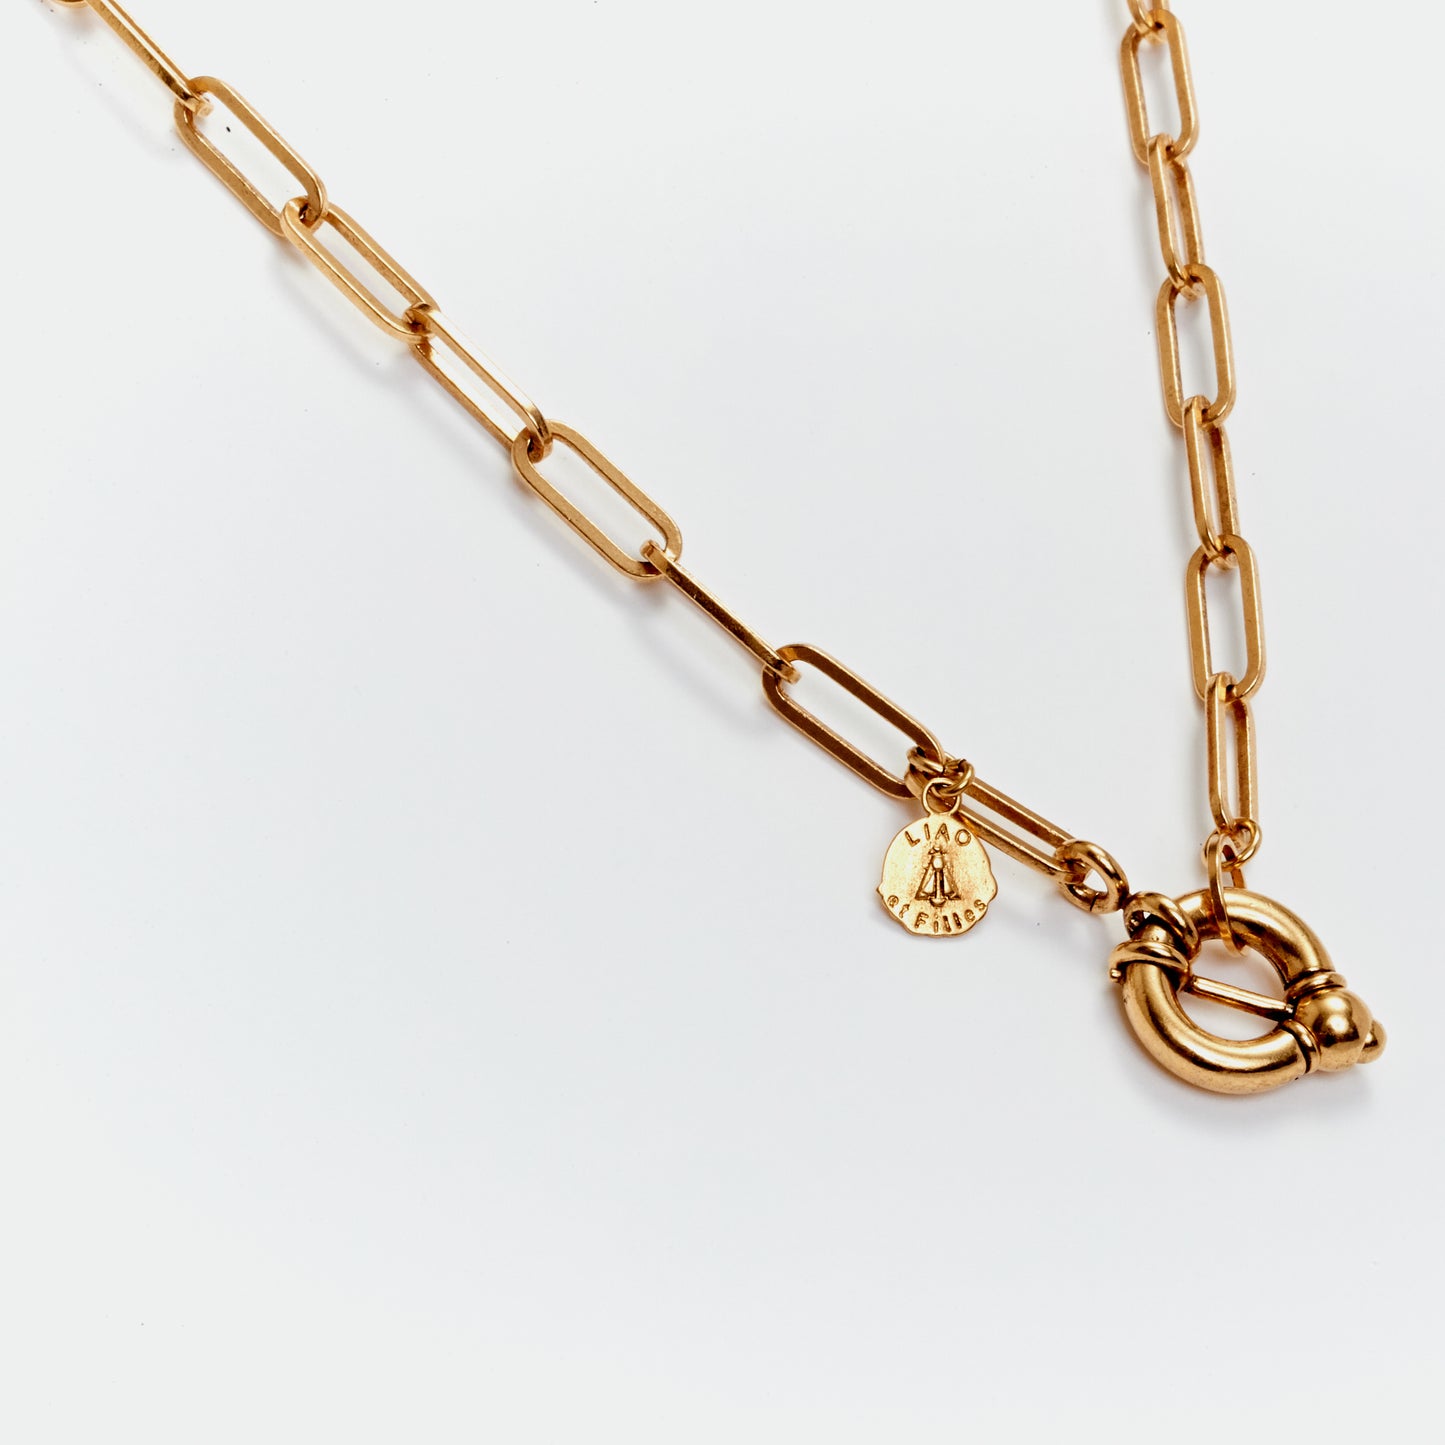 Clairette carabiner clasp necklace